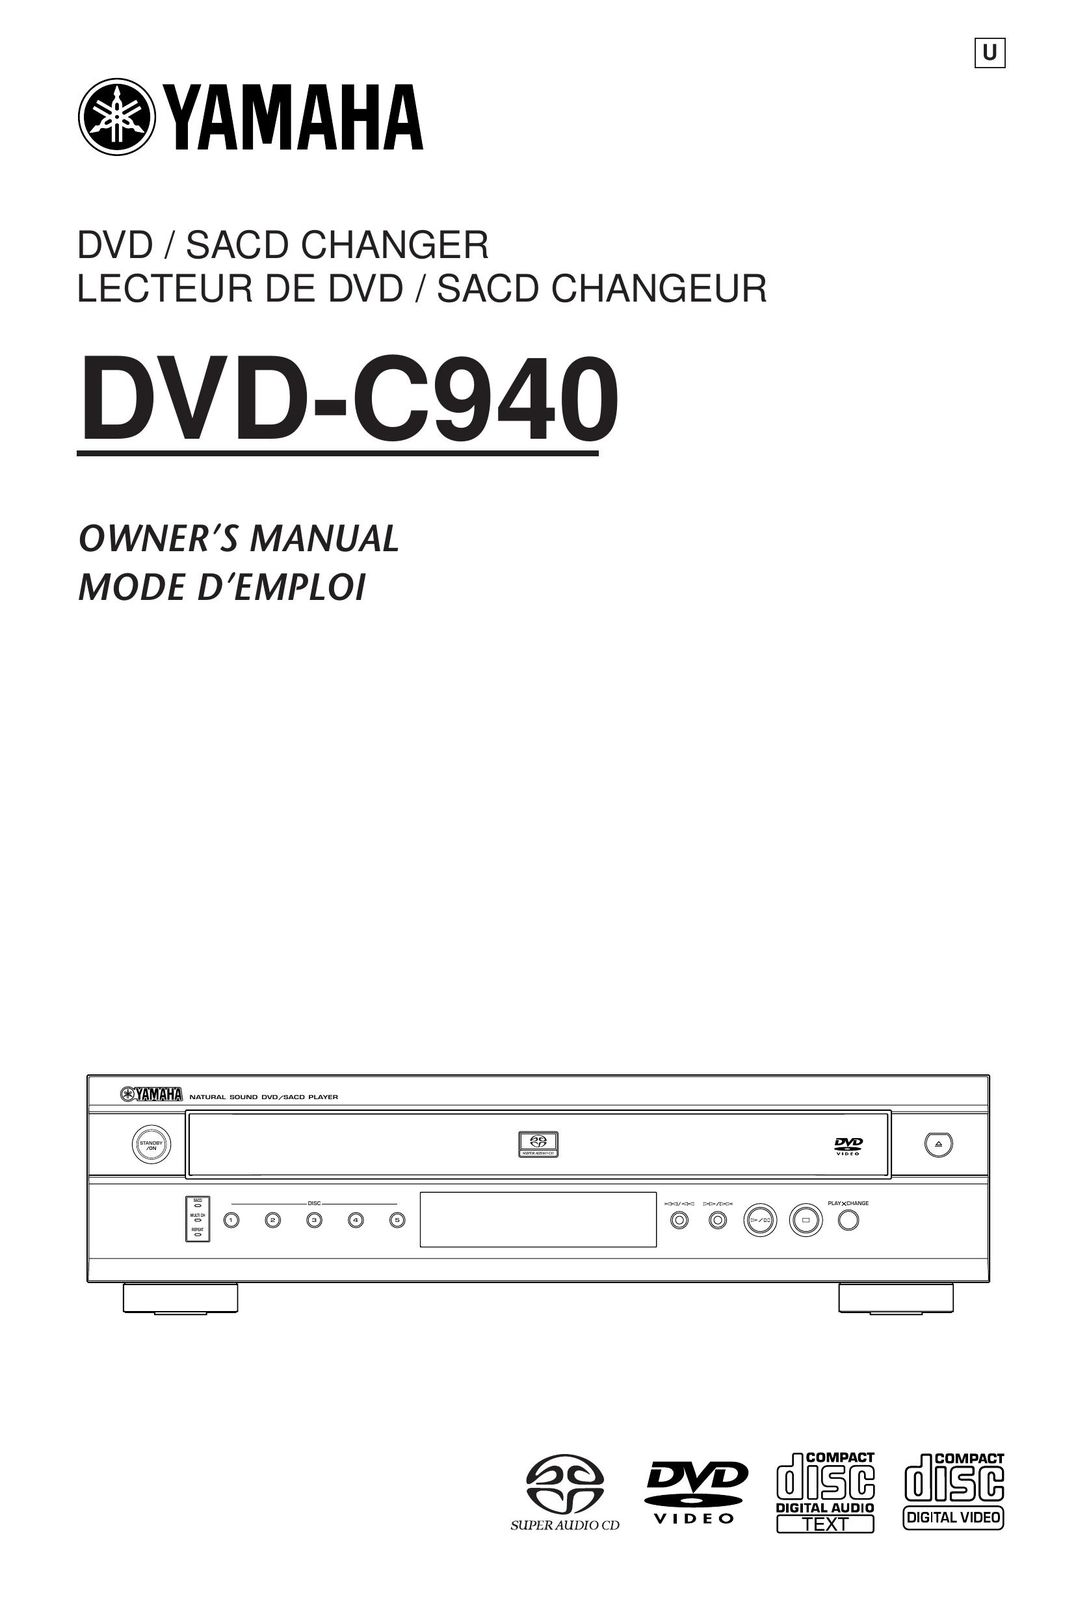 Yamaha DVD-C940 Stereo System User Manual